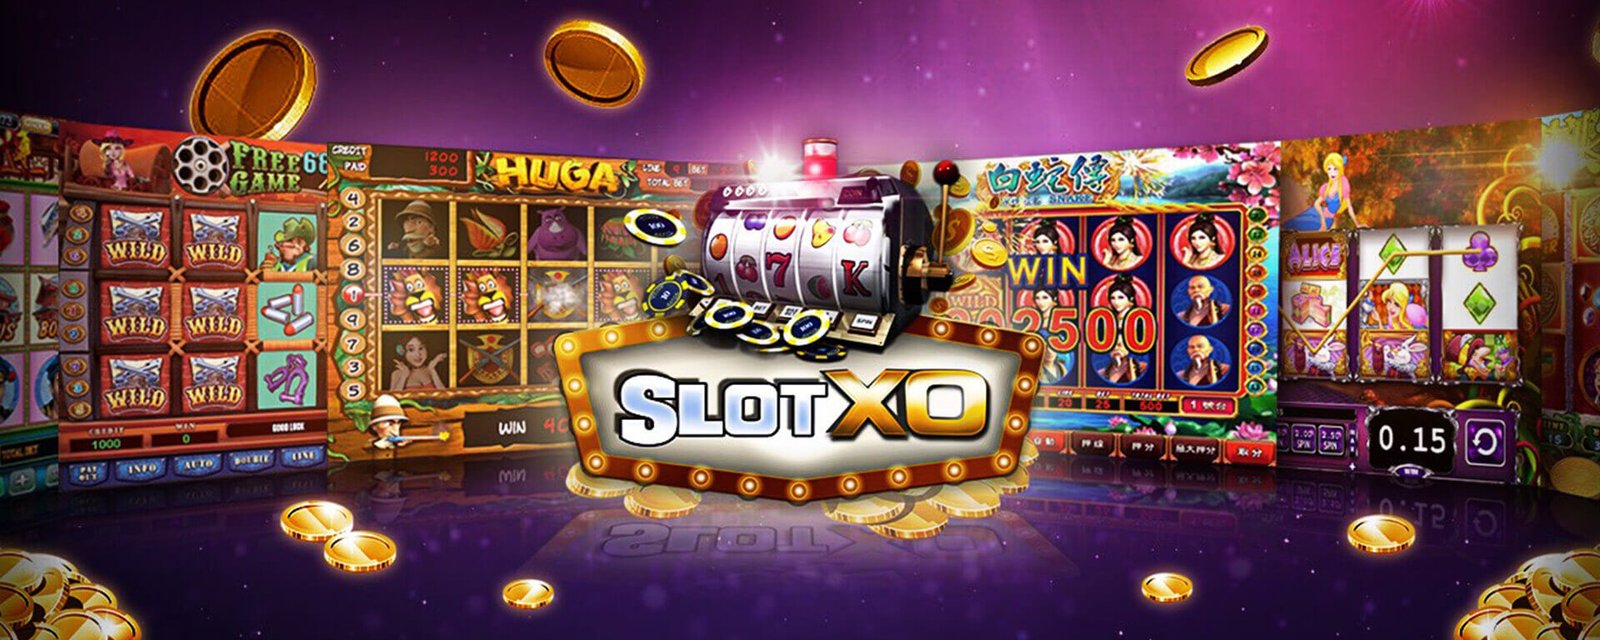 slotxo-เข้าสู่ระบบ5-slot-xo